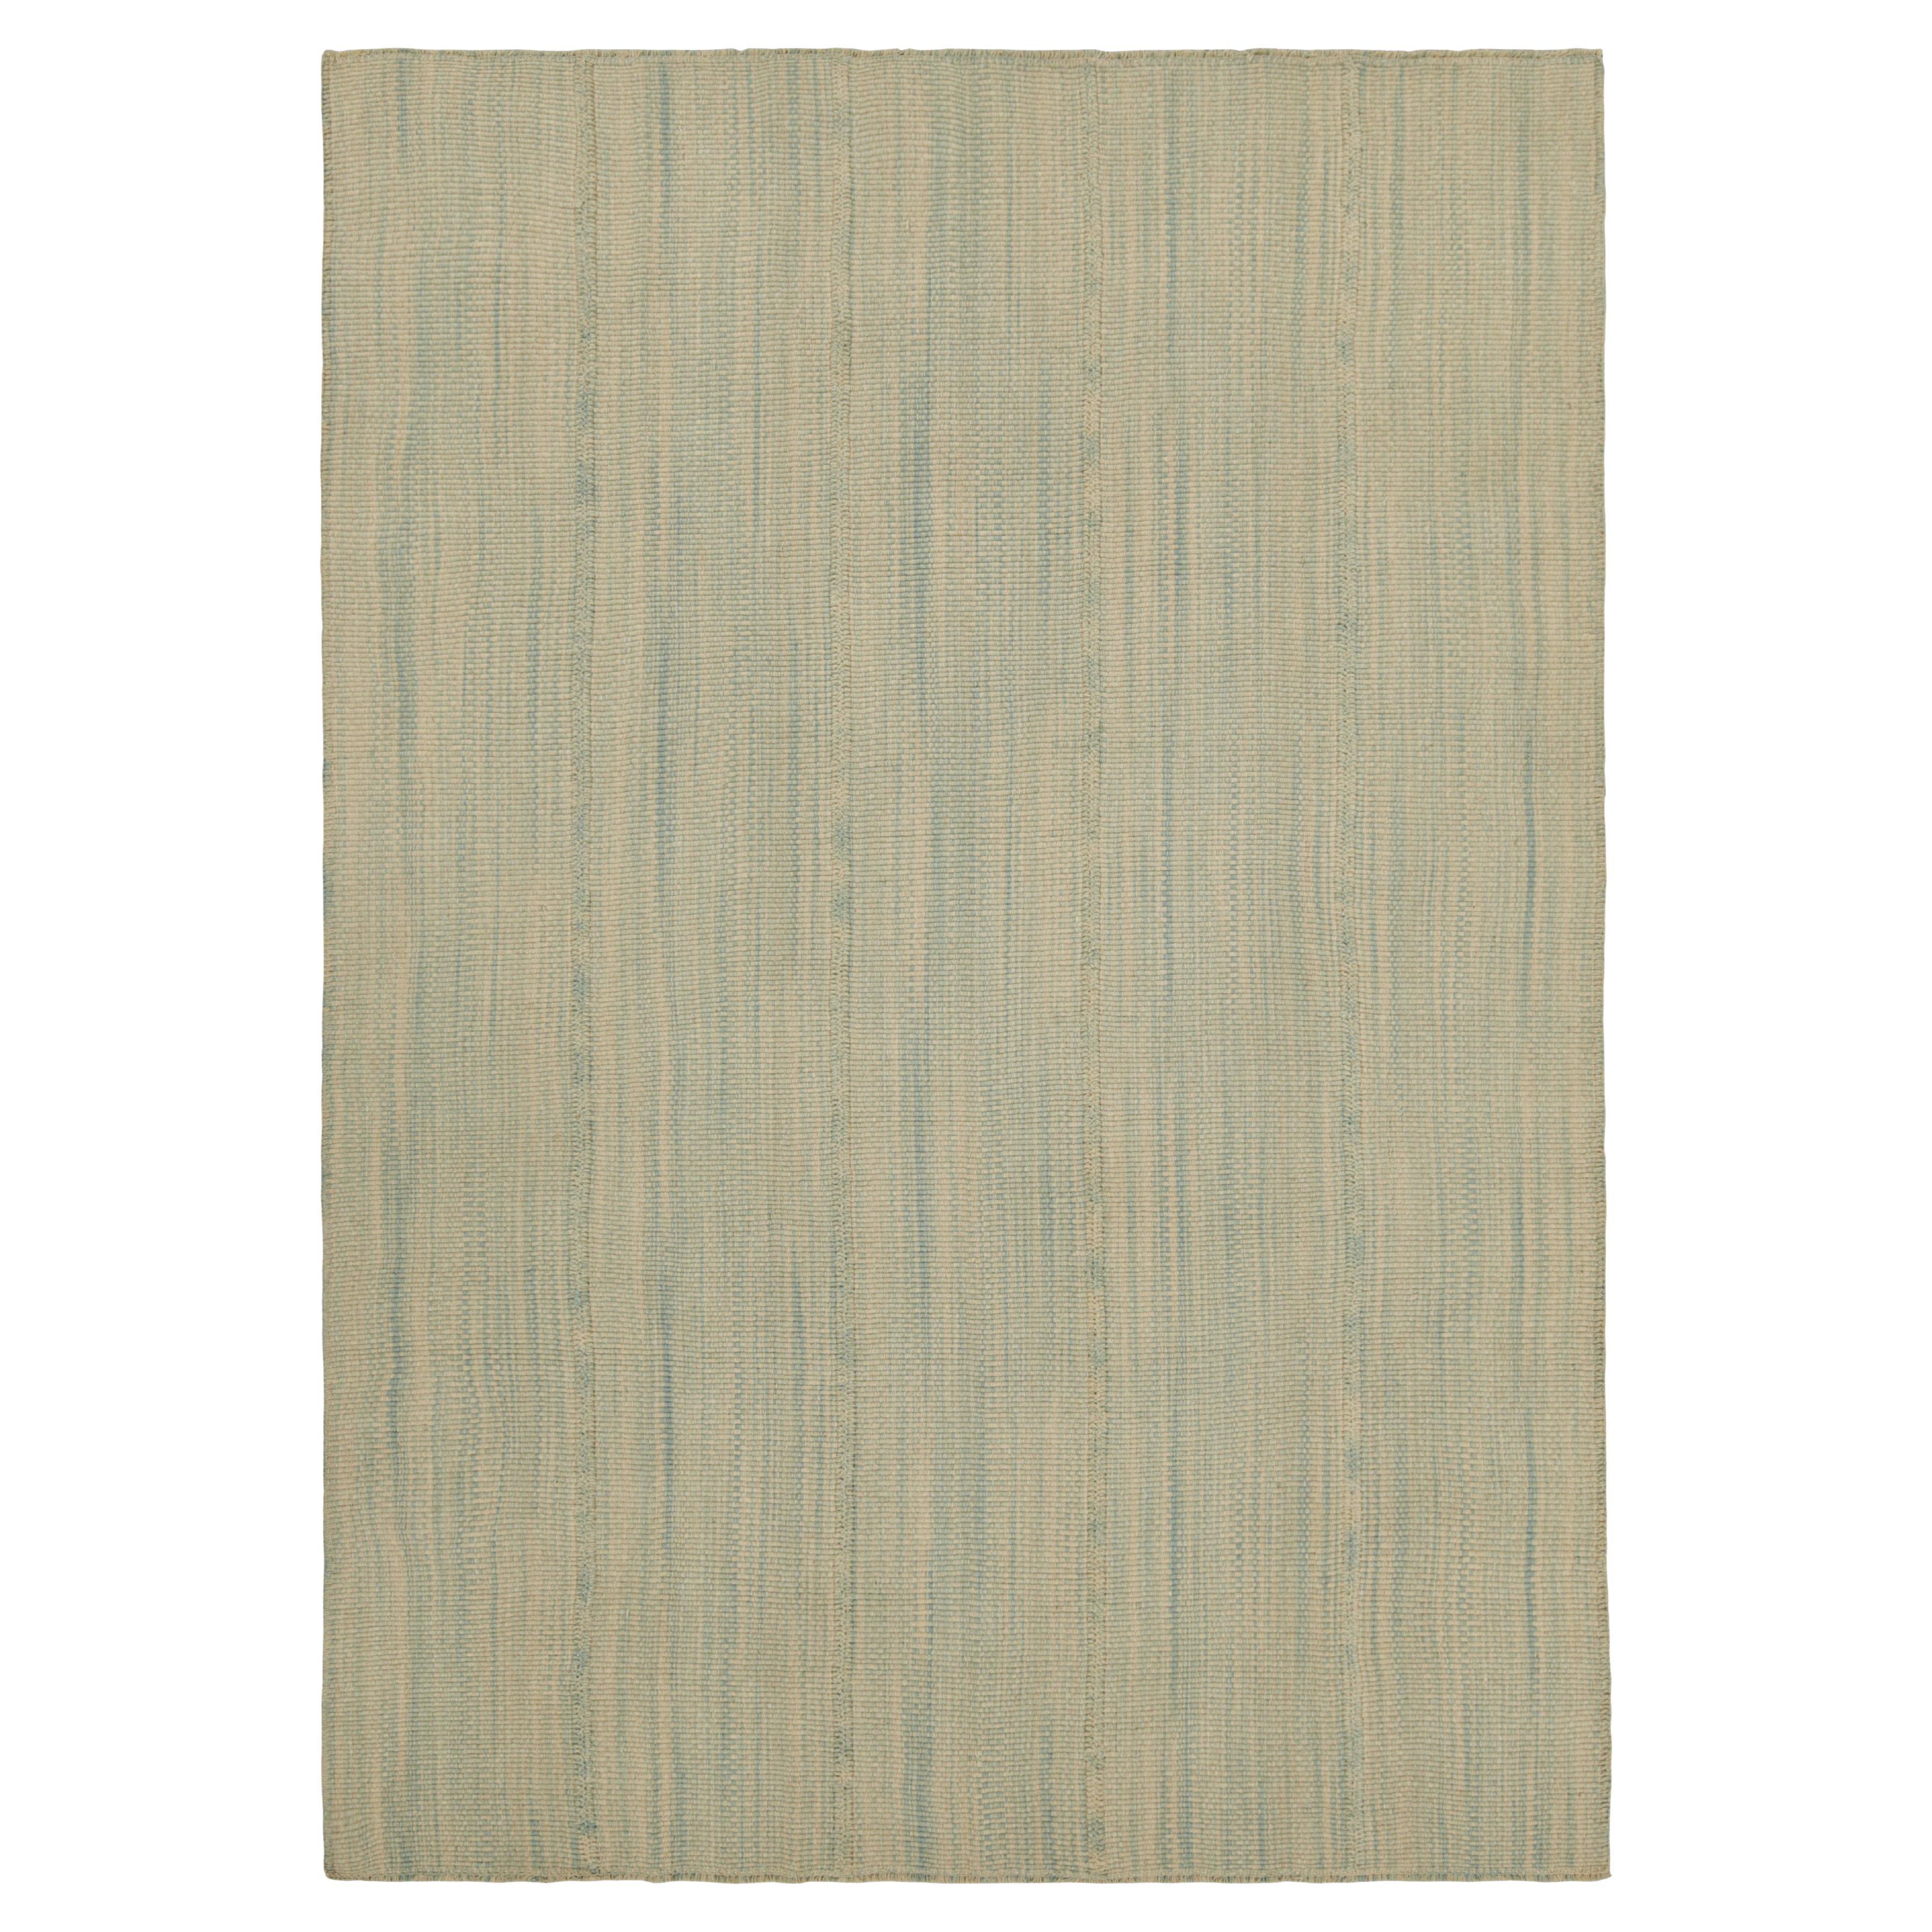 Rug & Kilim’s Contemporary Kilim in Blue and Cream White Textural Stripes